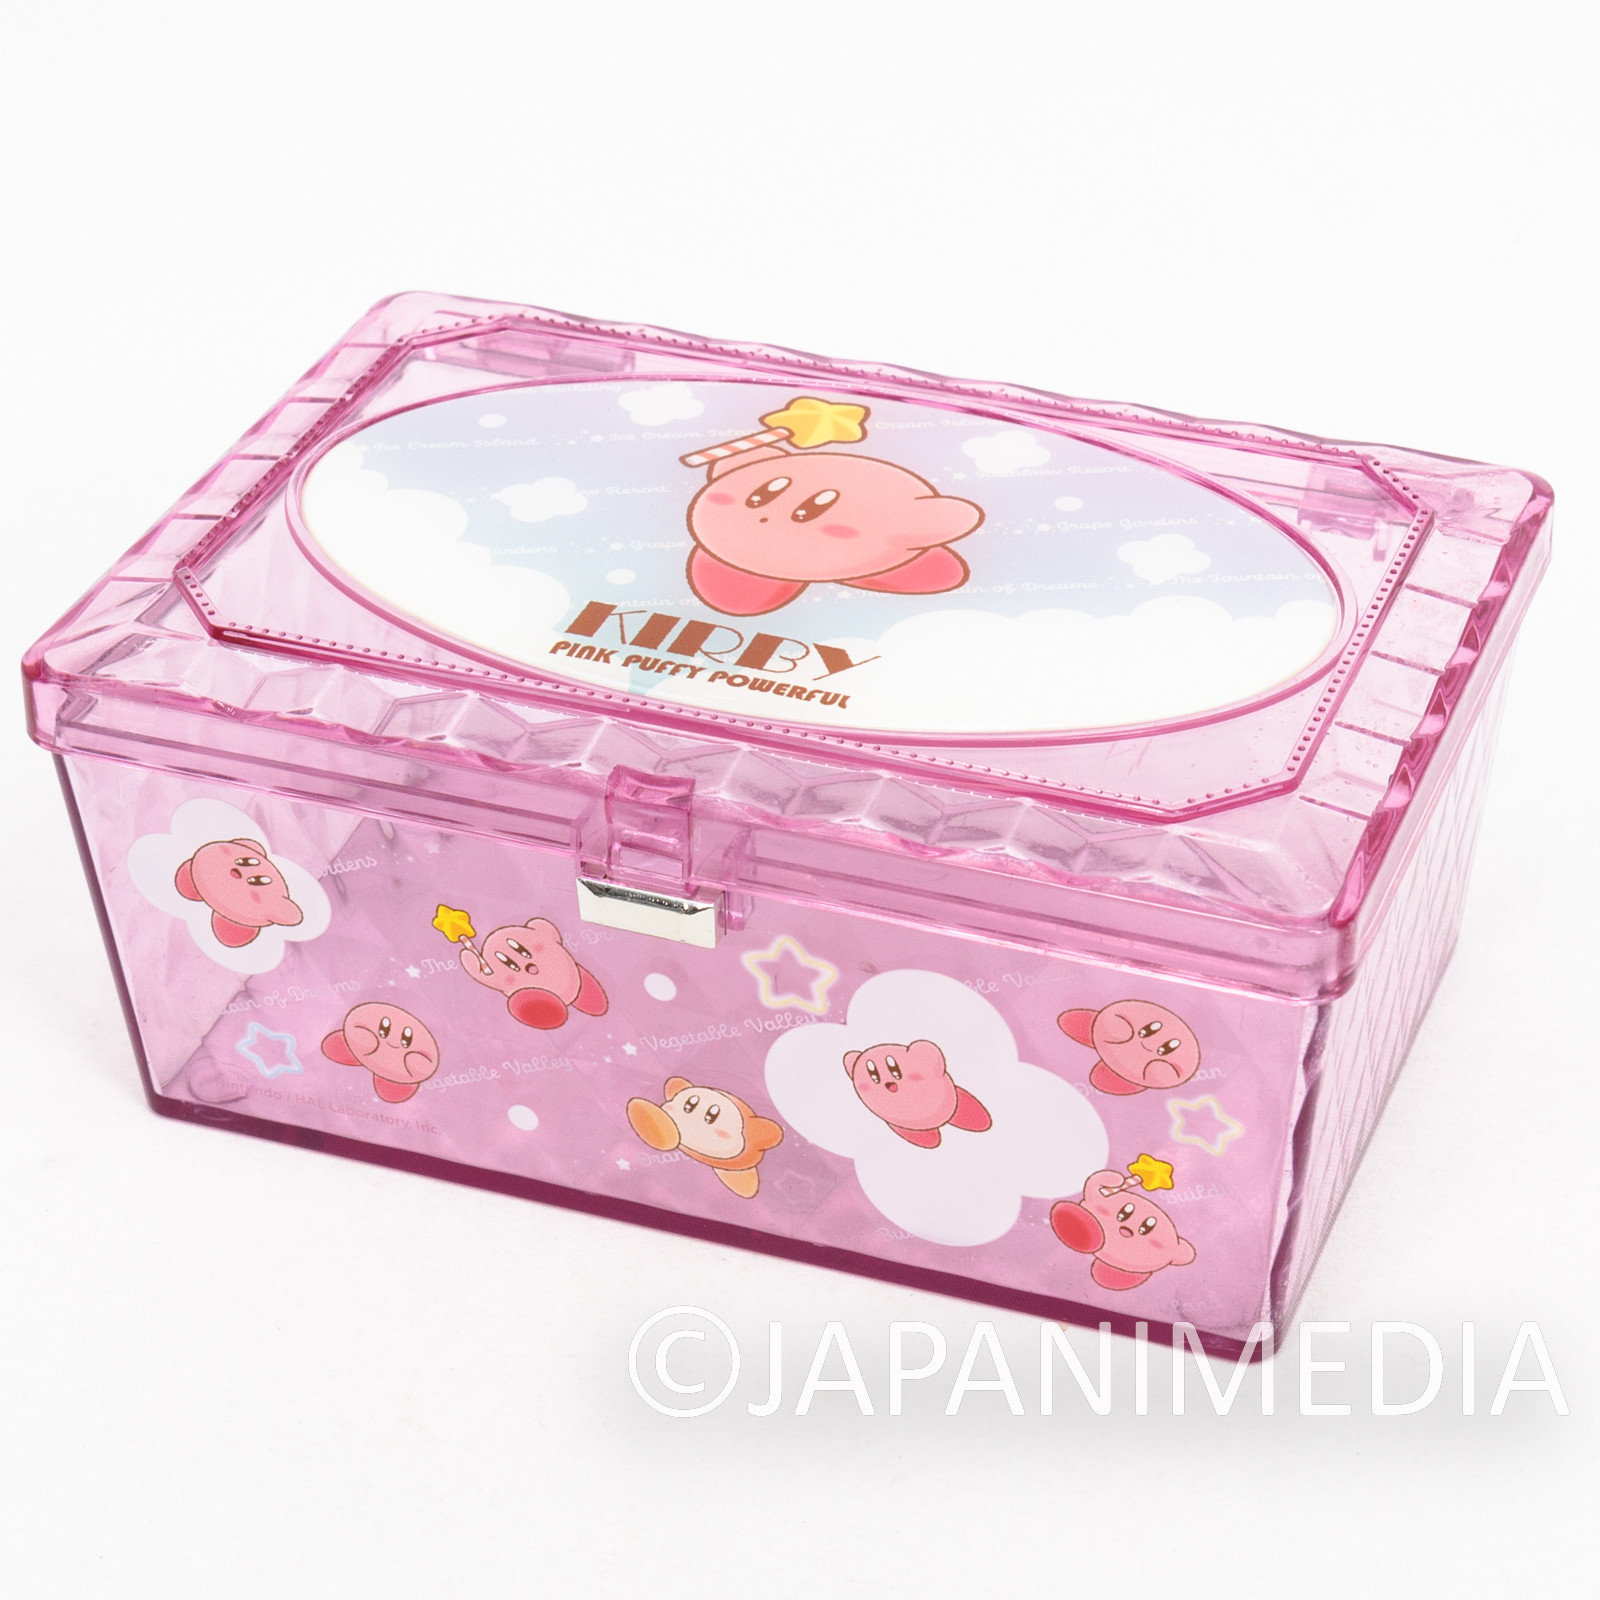 Kirby Super Star Plastic Case Box Pink JAPAN GAME NINTNEDO